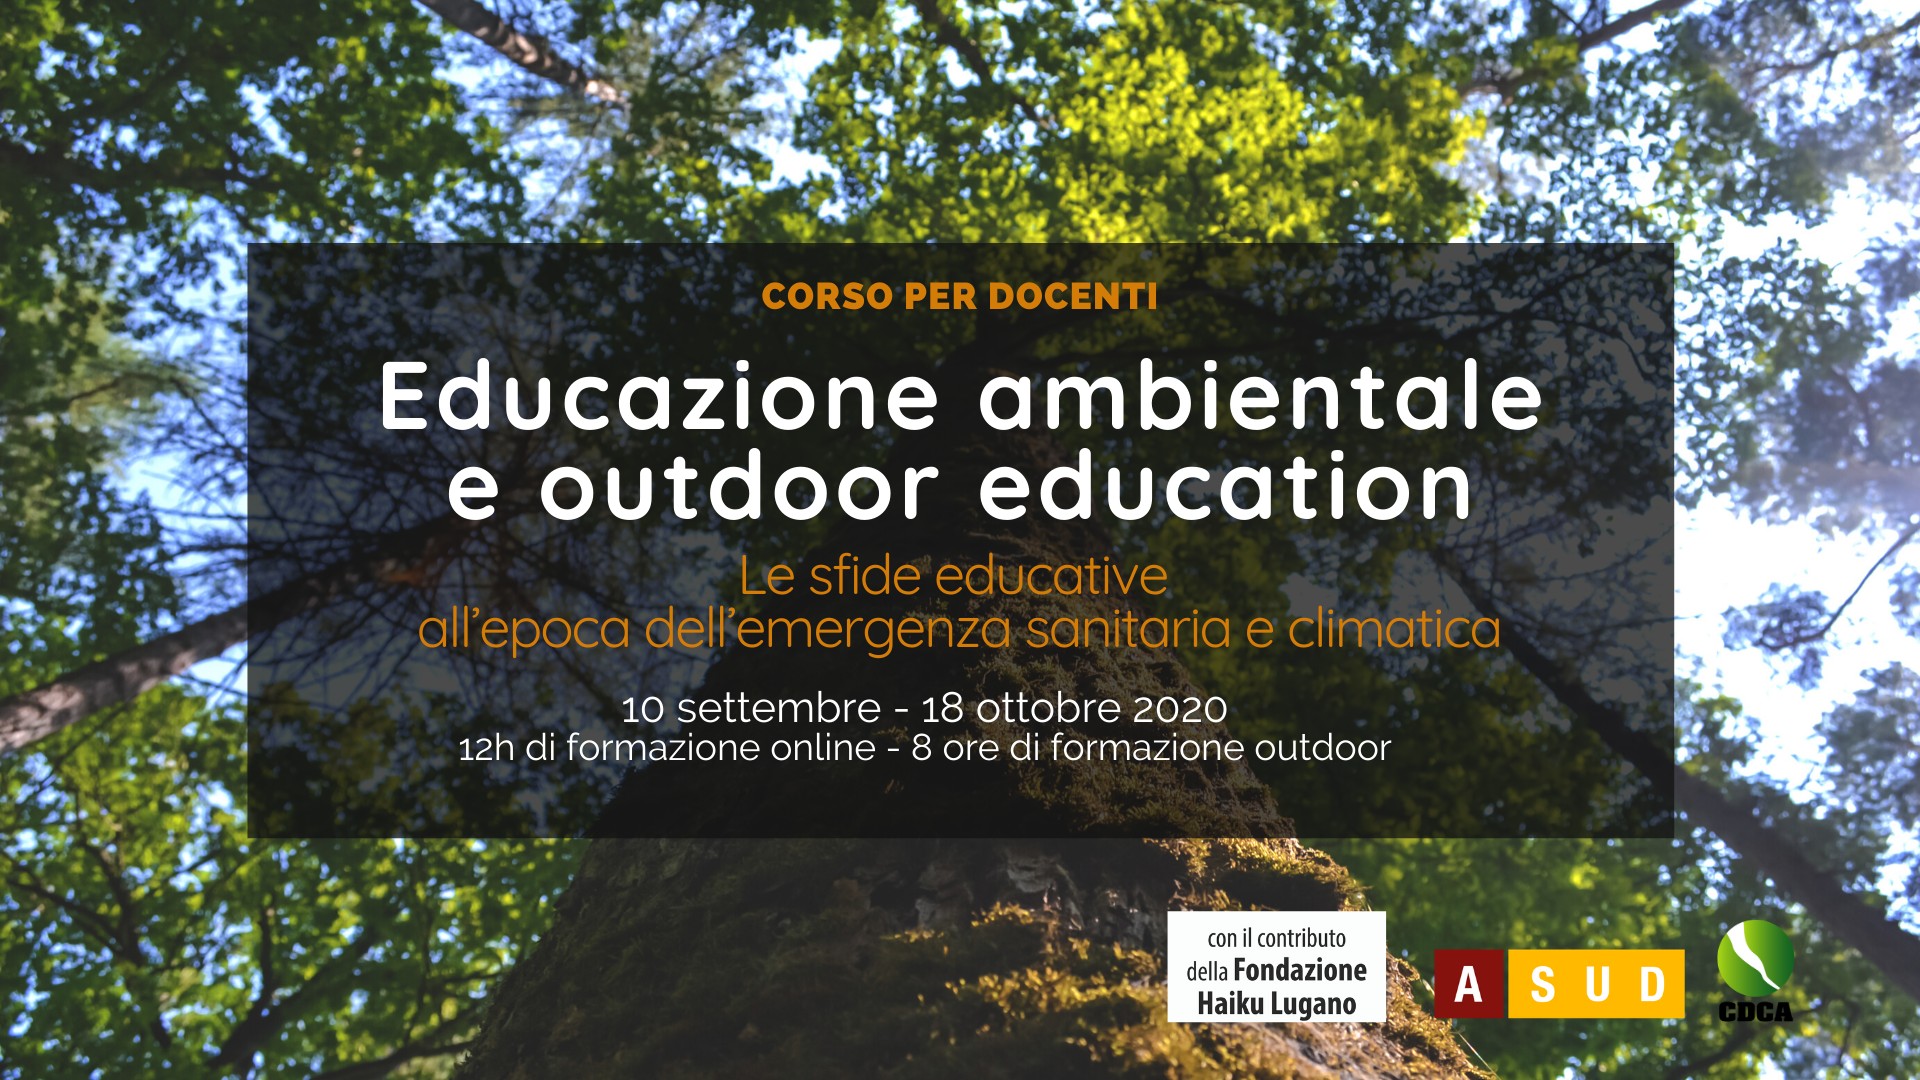 outdoor education ed educazione ambientale